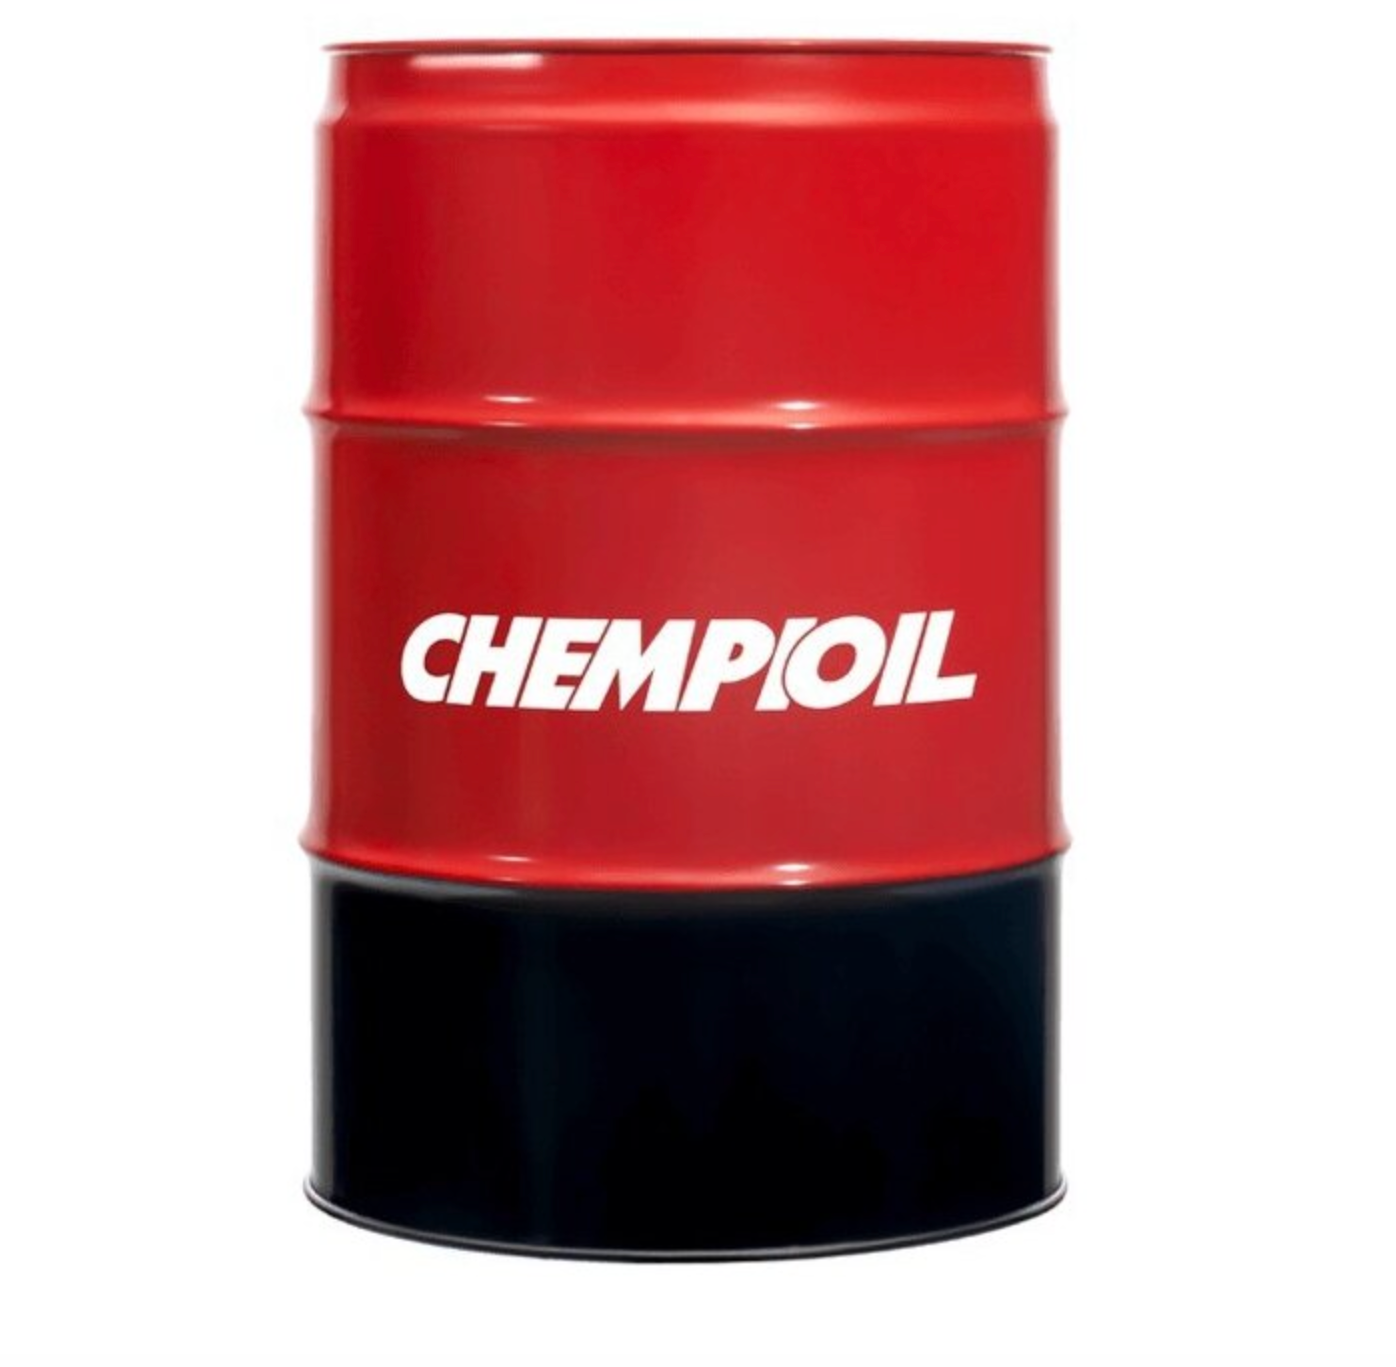 CHEMPIOIL Hydro ISO 32, 60л мин. гидравл. масло